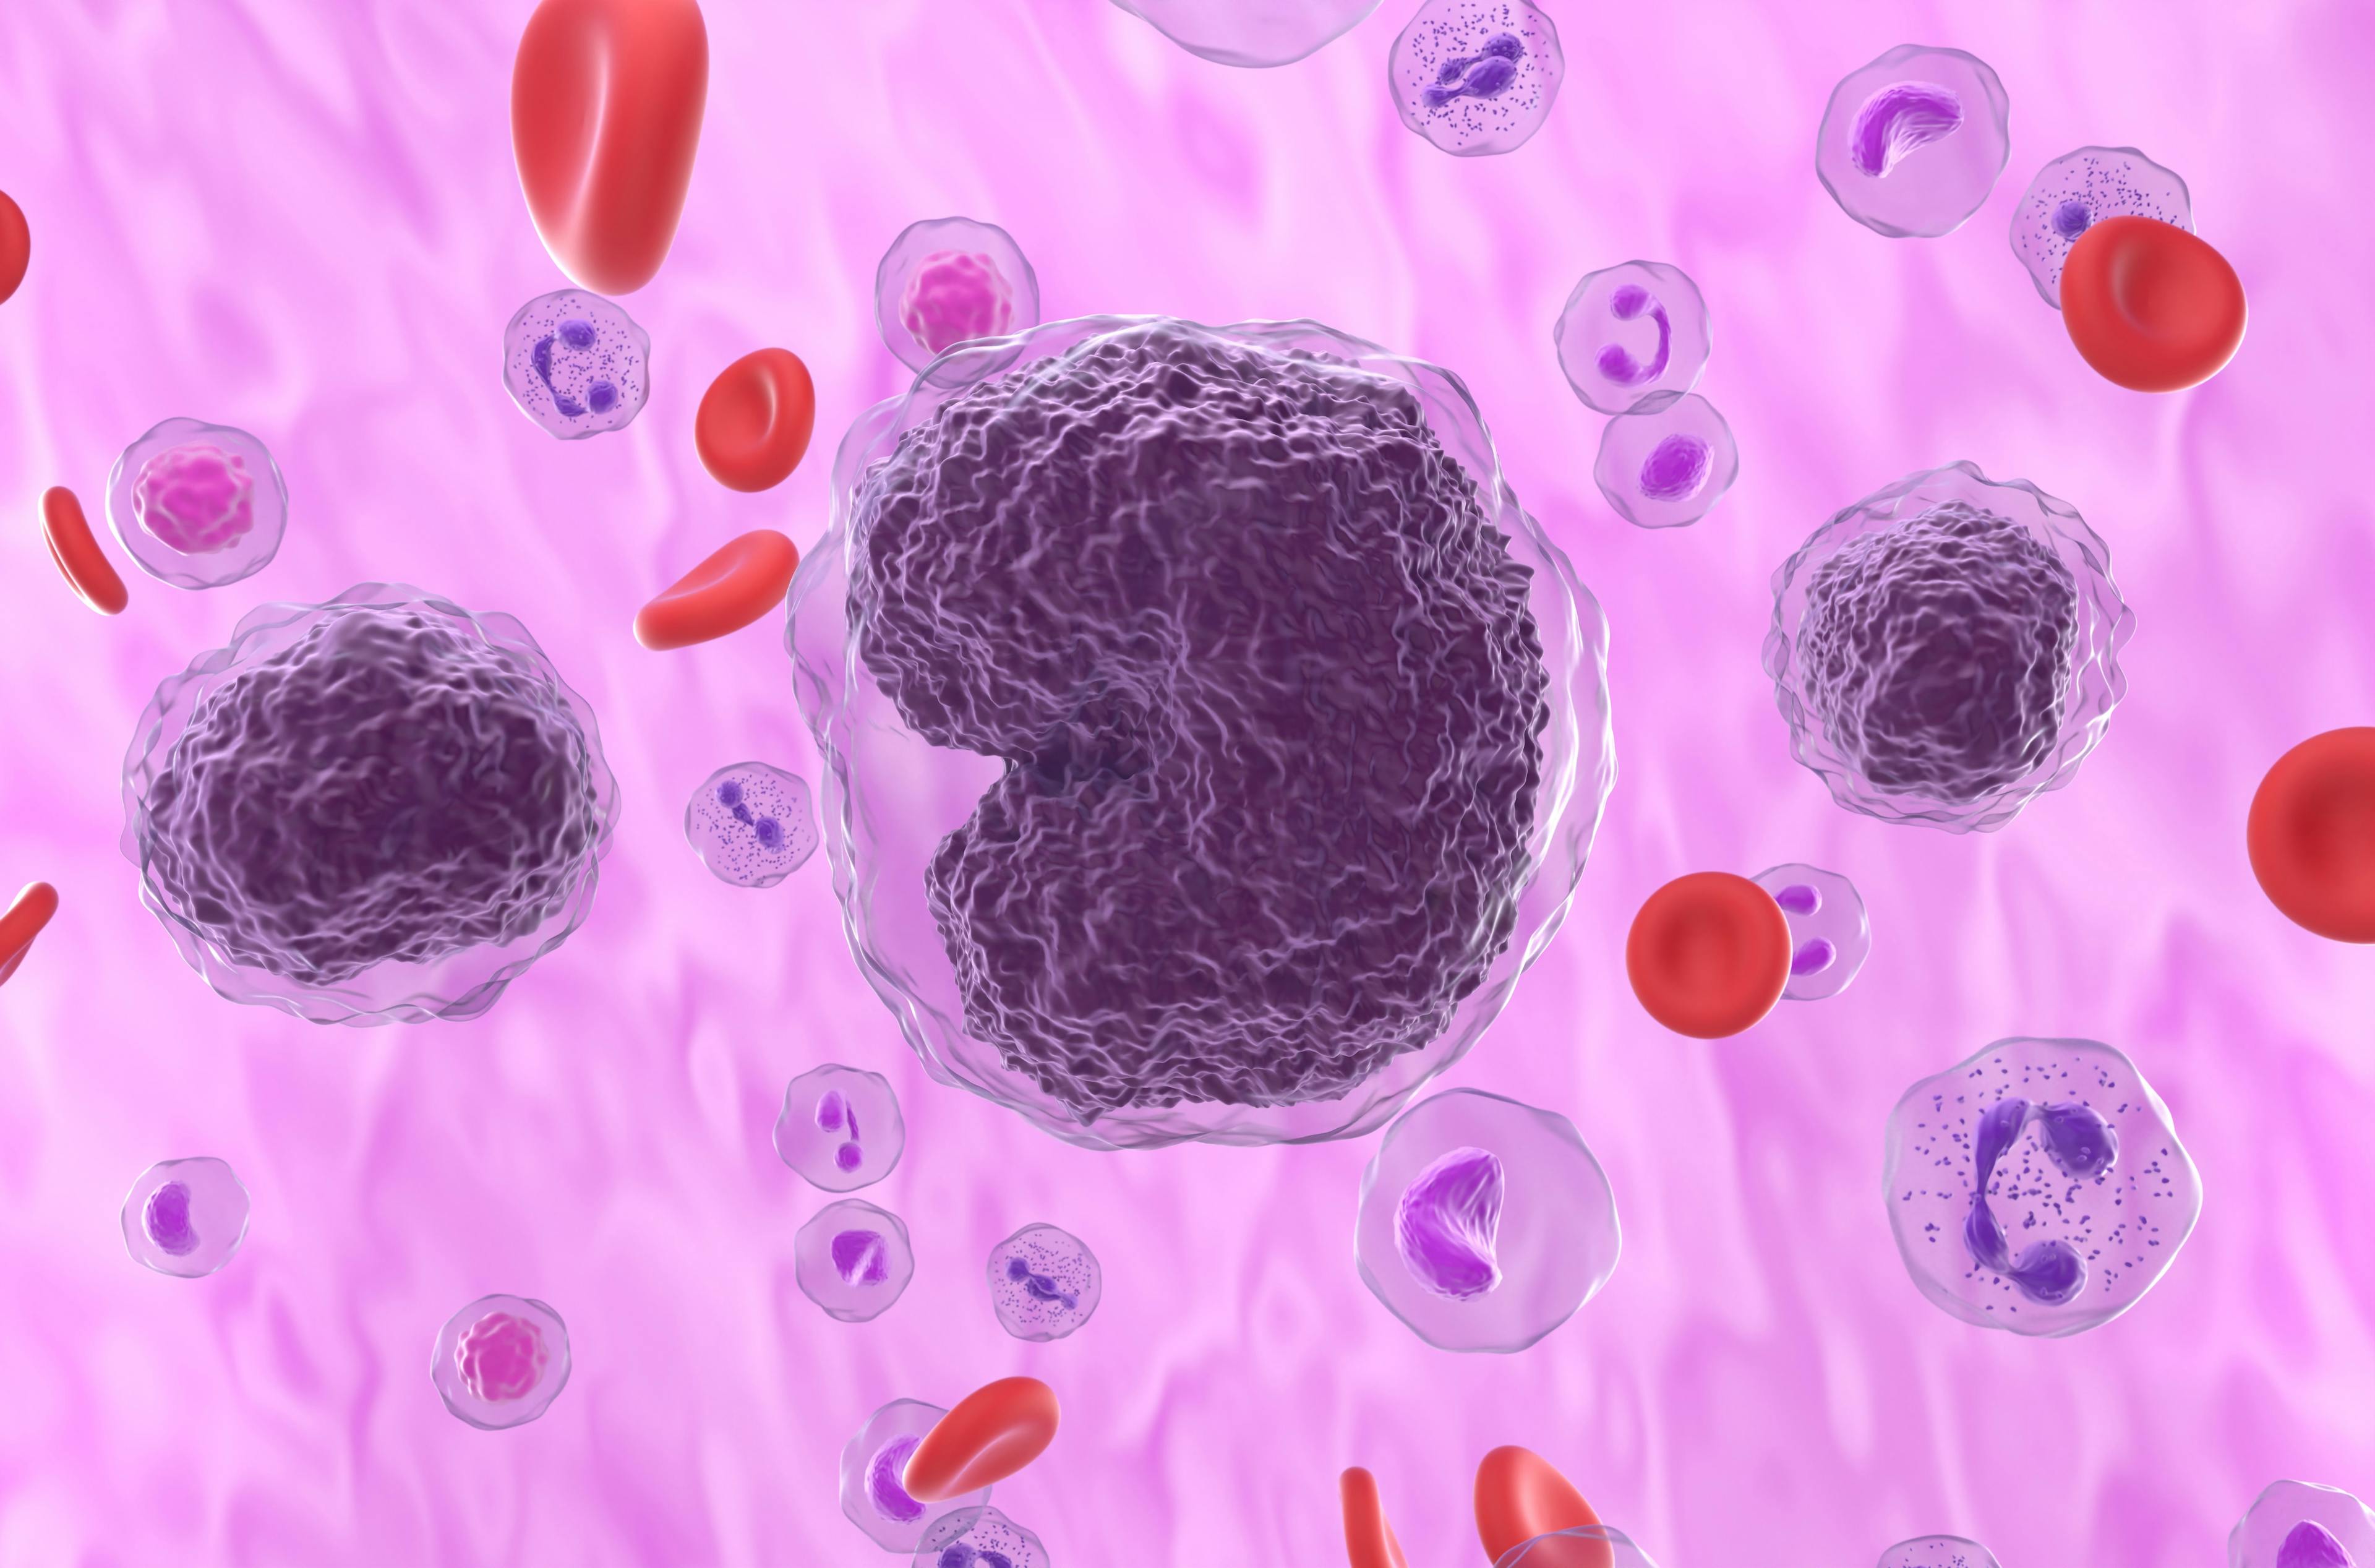 Non-hodgkin lymphoma (NHL) cells in the blood flow - closeup view 3d illustration | Image Credit: © LASZLO - www.stock.adobe.com